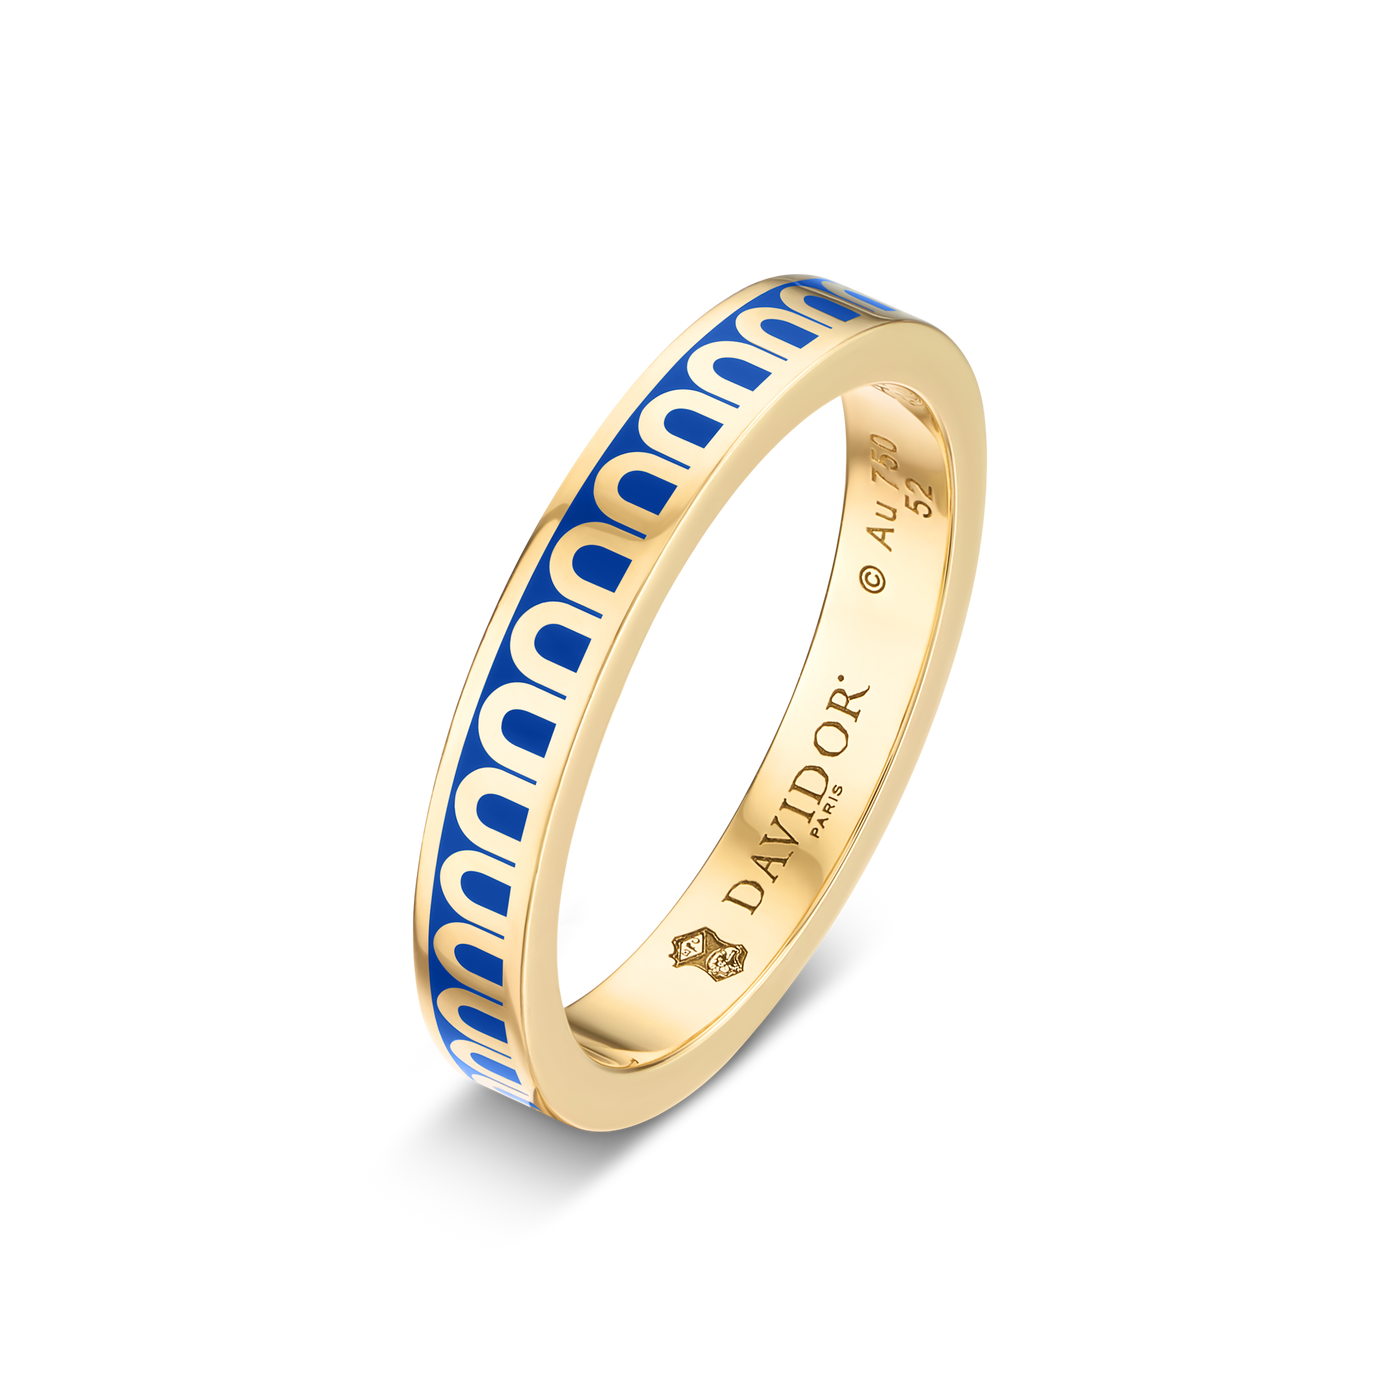 L'Arc de DAVIDOR Ring PM, 18k Yellow Gold with Riviera Lacquered Ceramic - DAVIDOR